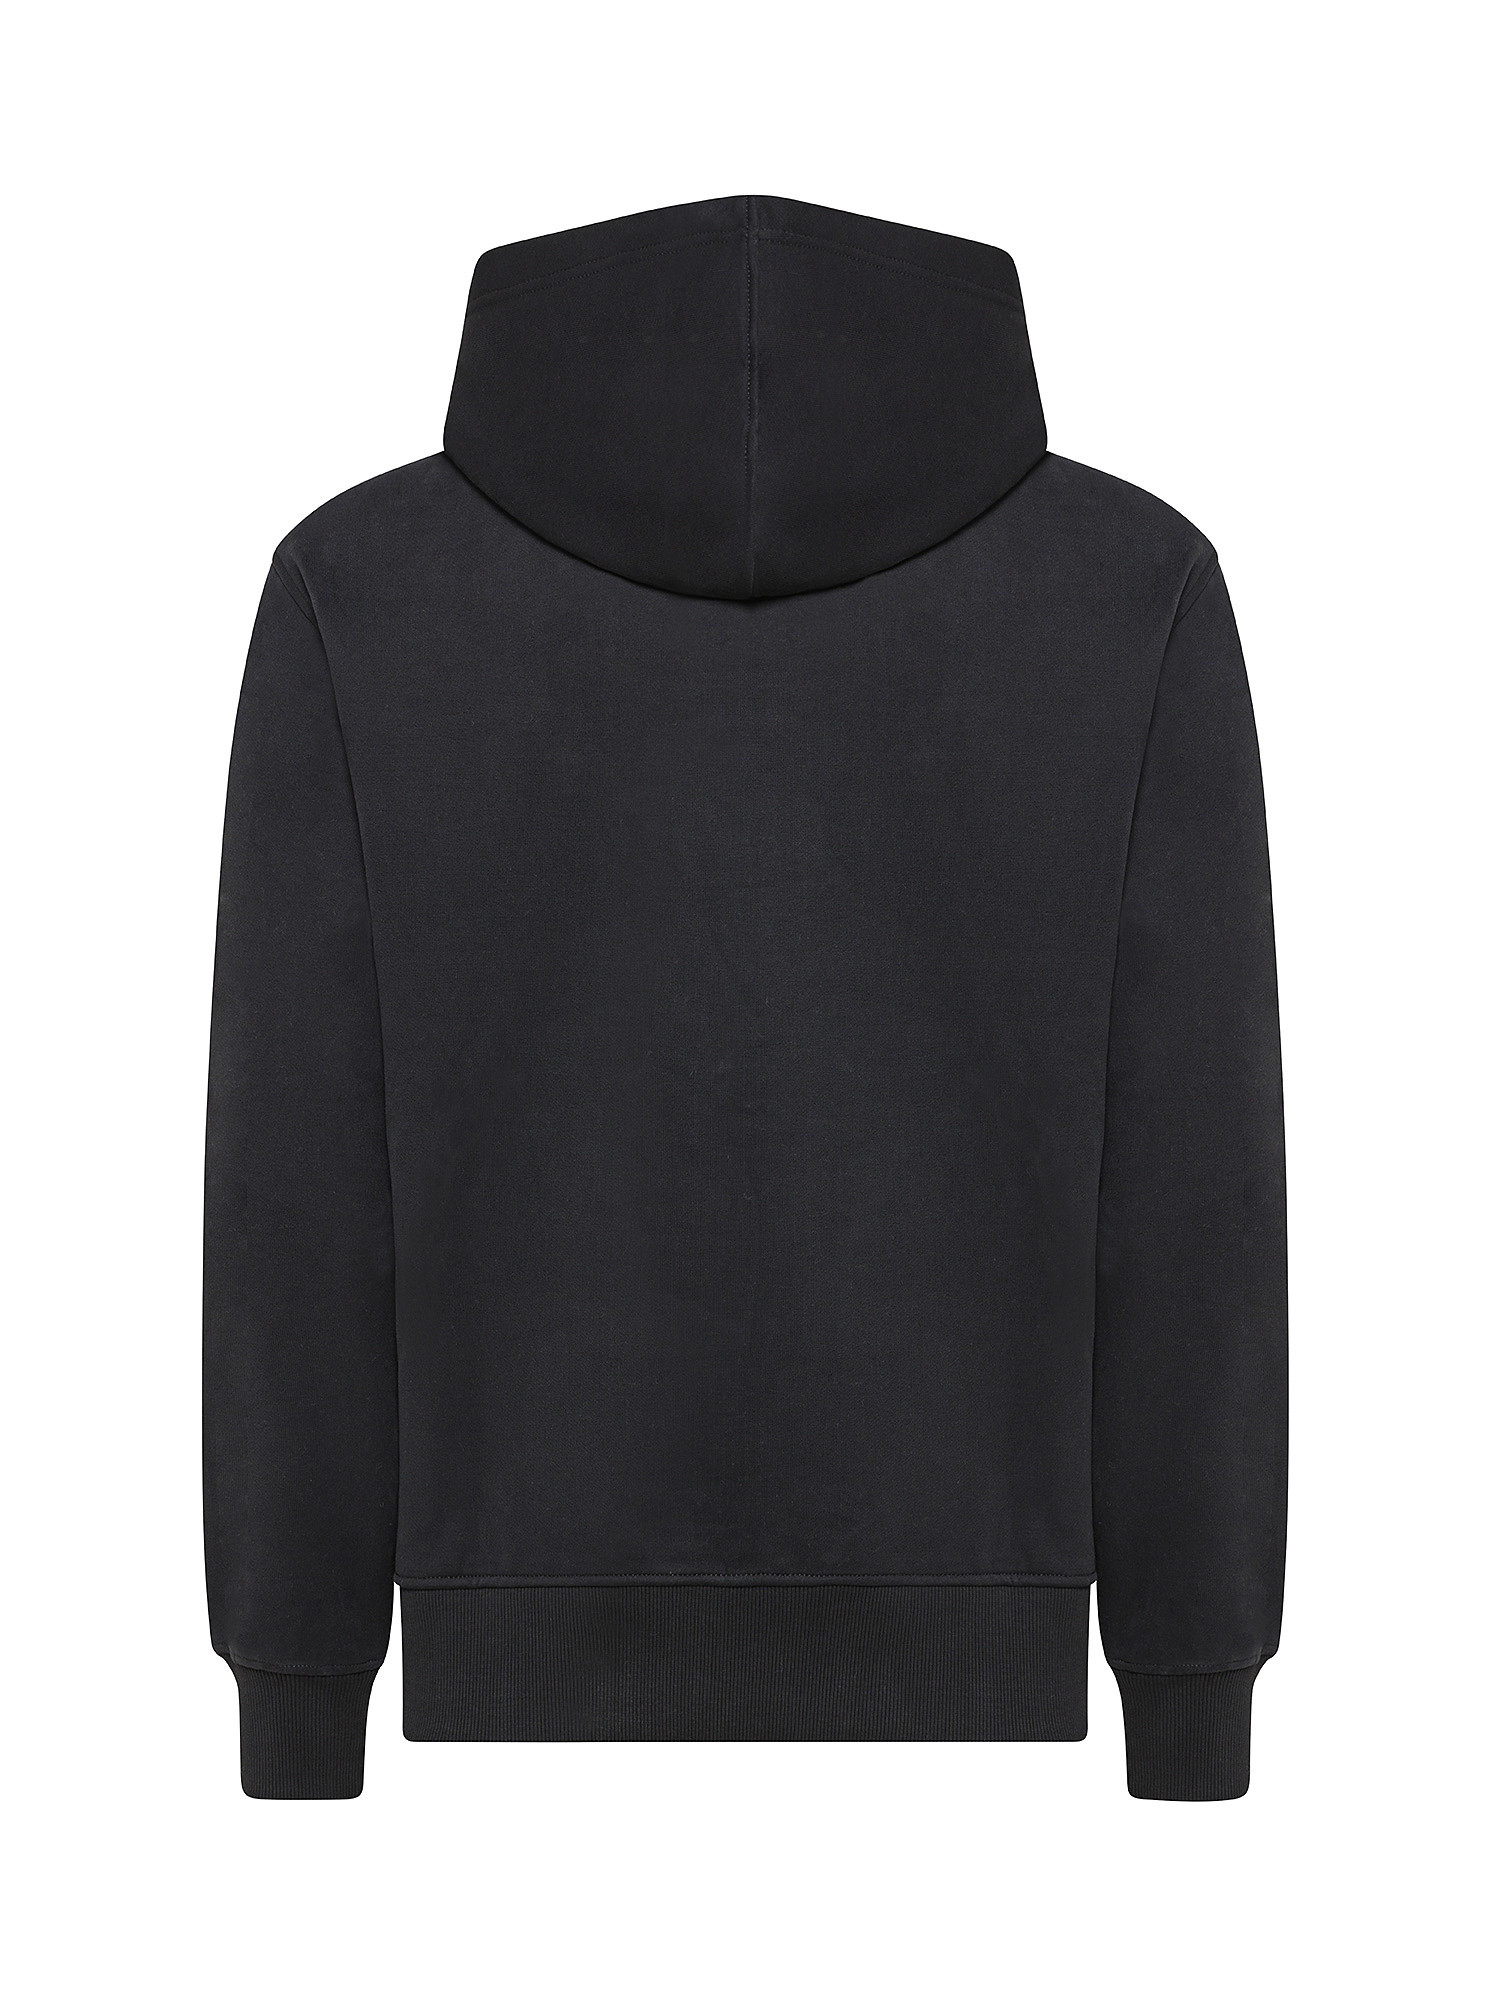 Calvin Klein Jeans - Cotton sweatshirt with logo, Black, large image number 1